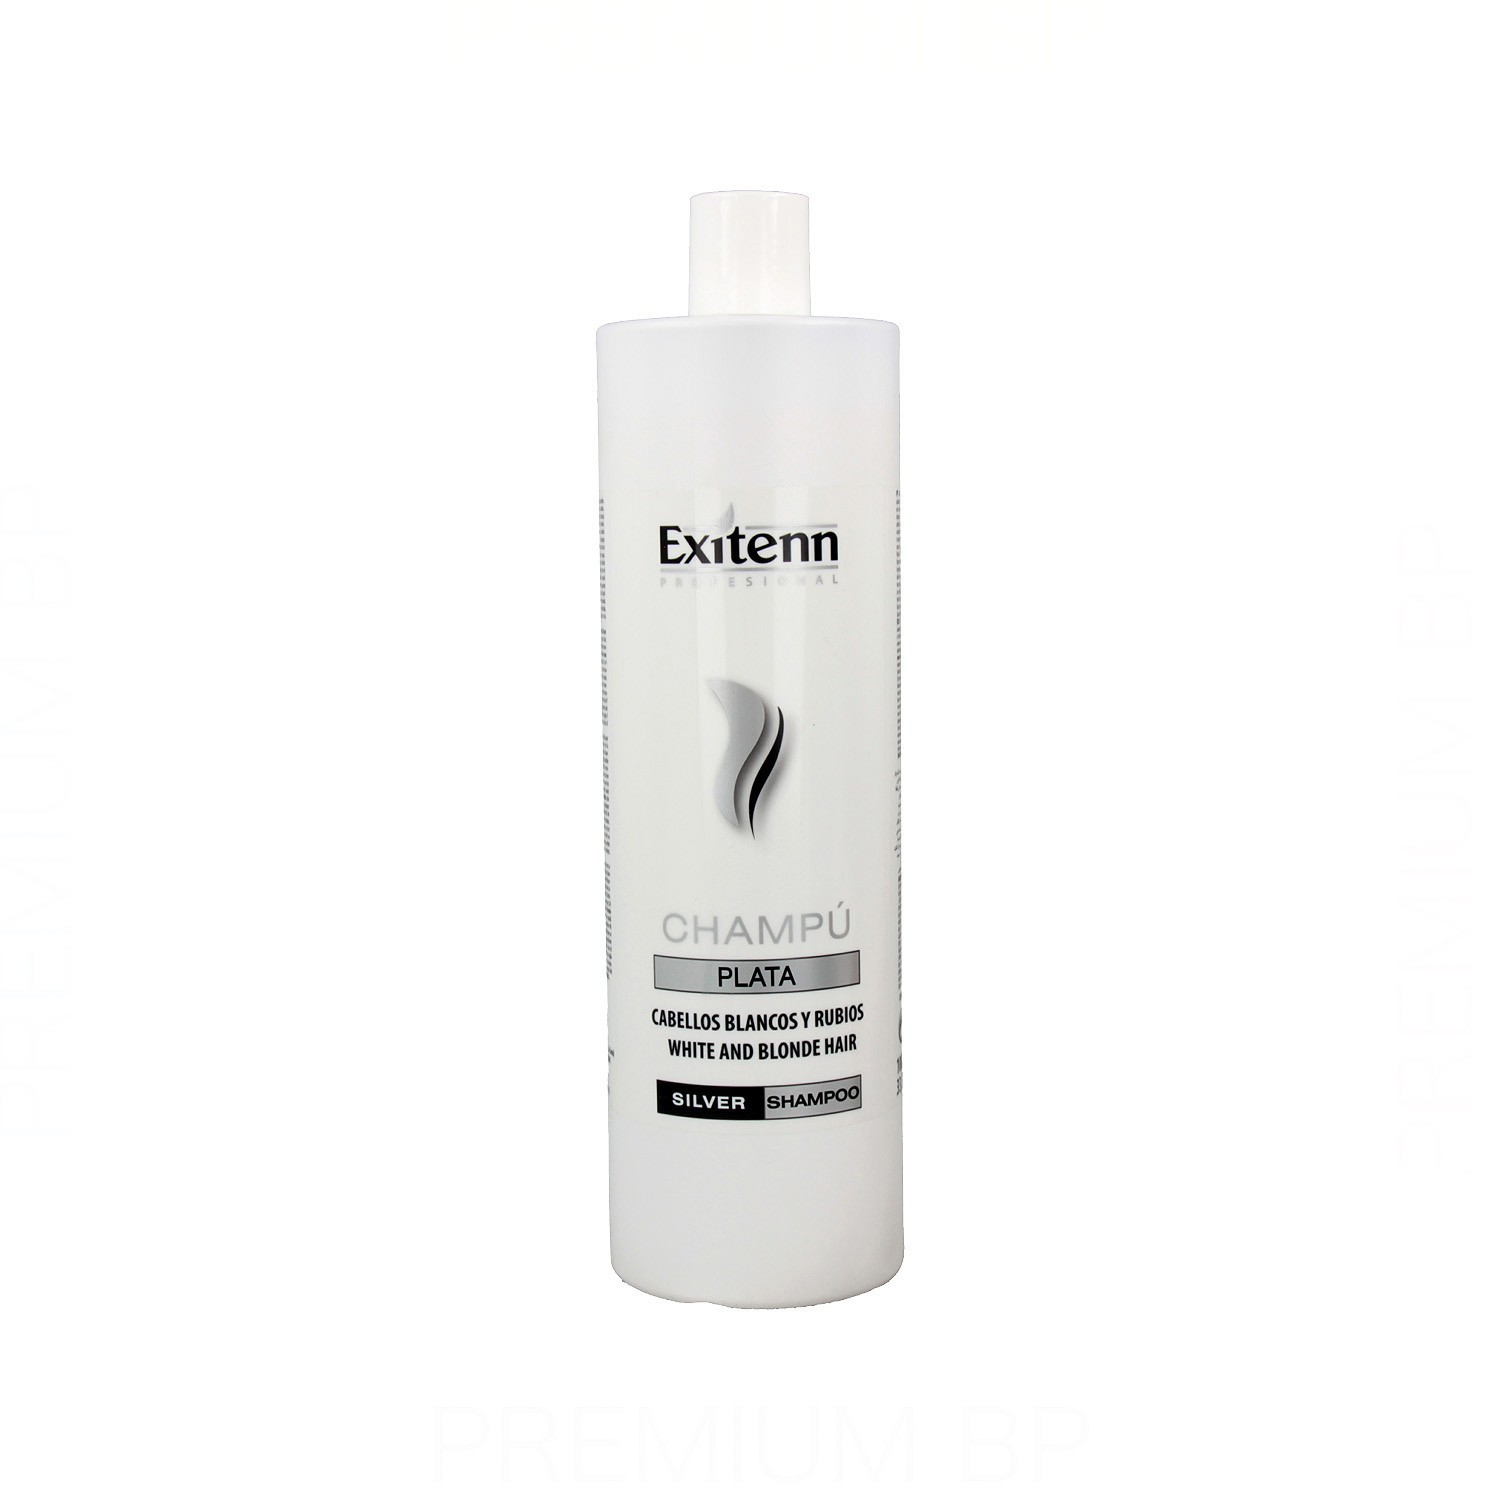 Exitenn - Exitenn plata blancos y rubios champú 1000 ml, champú ideal para eliminar el amarillo del cabello.